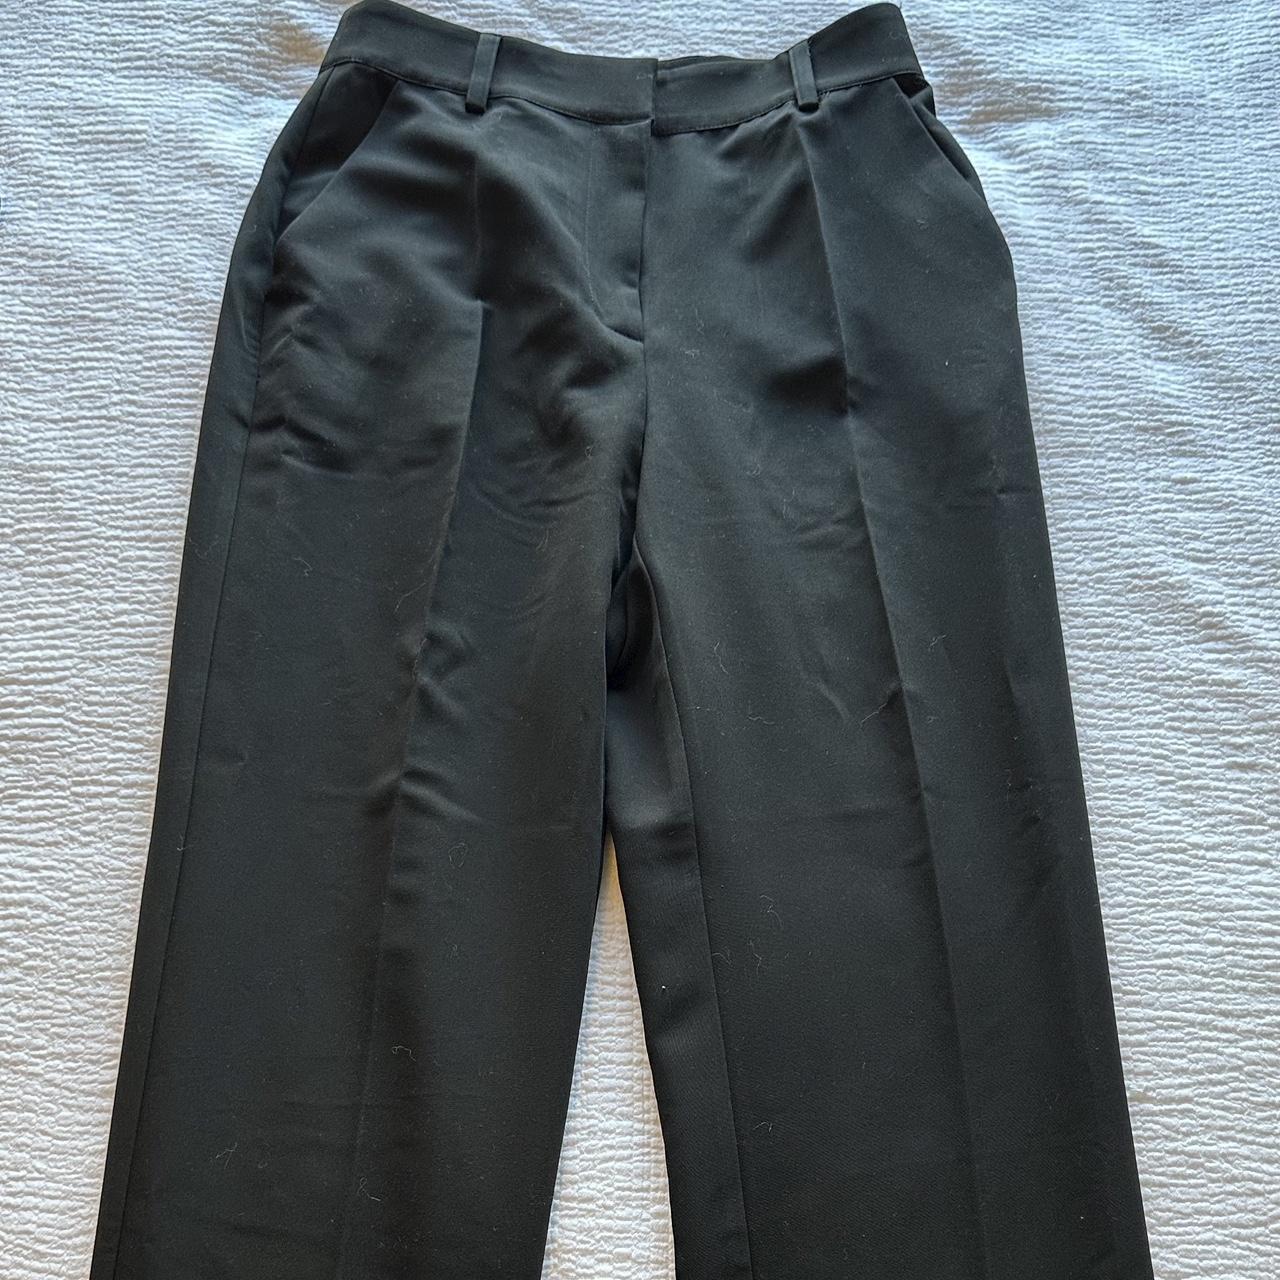 NAKD brand black trousers, size EU 36 (US 6) - Depop